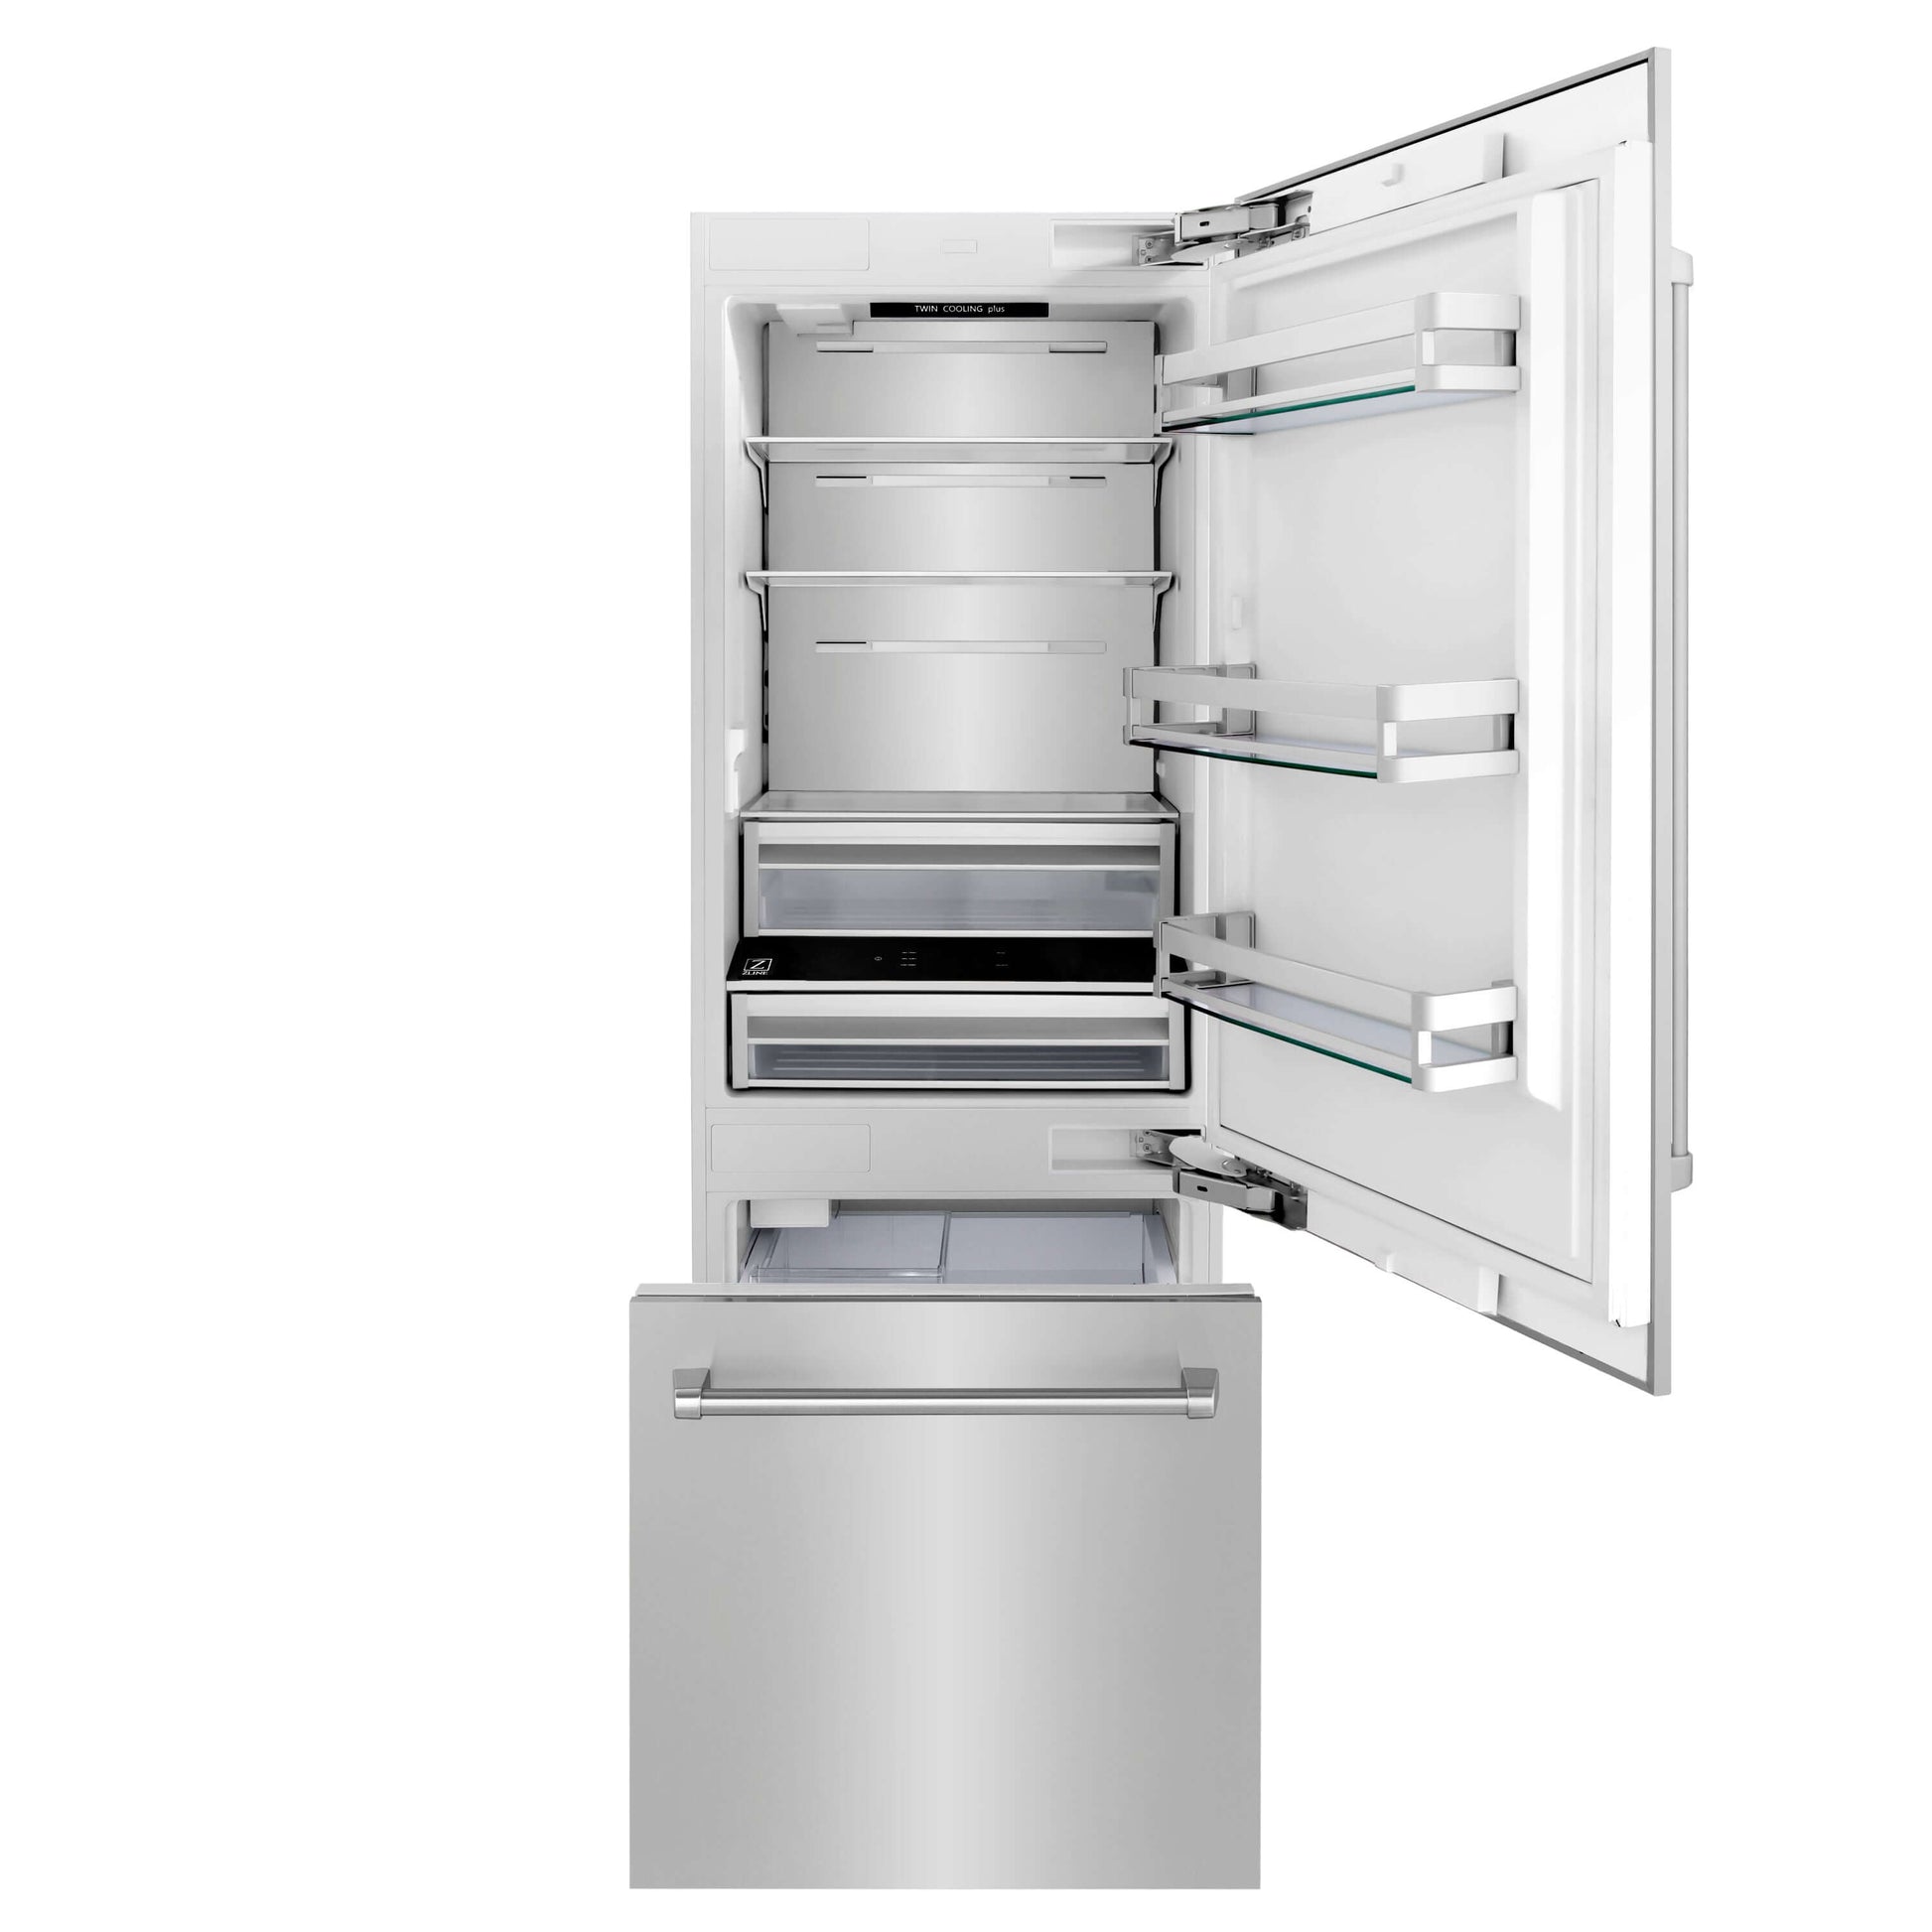 ZLINE 30 in. 16.1 cu. ft. Built-In 2-Door Bottom Freezer Refrigerator with Internal Water and Ice Dispenser in Stainless Steel (RBIV-304-30) front, doors and bottom freezer drawer open.